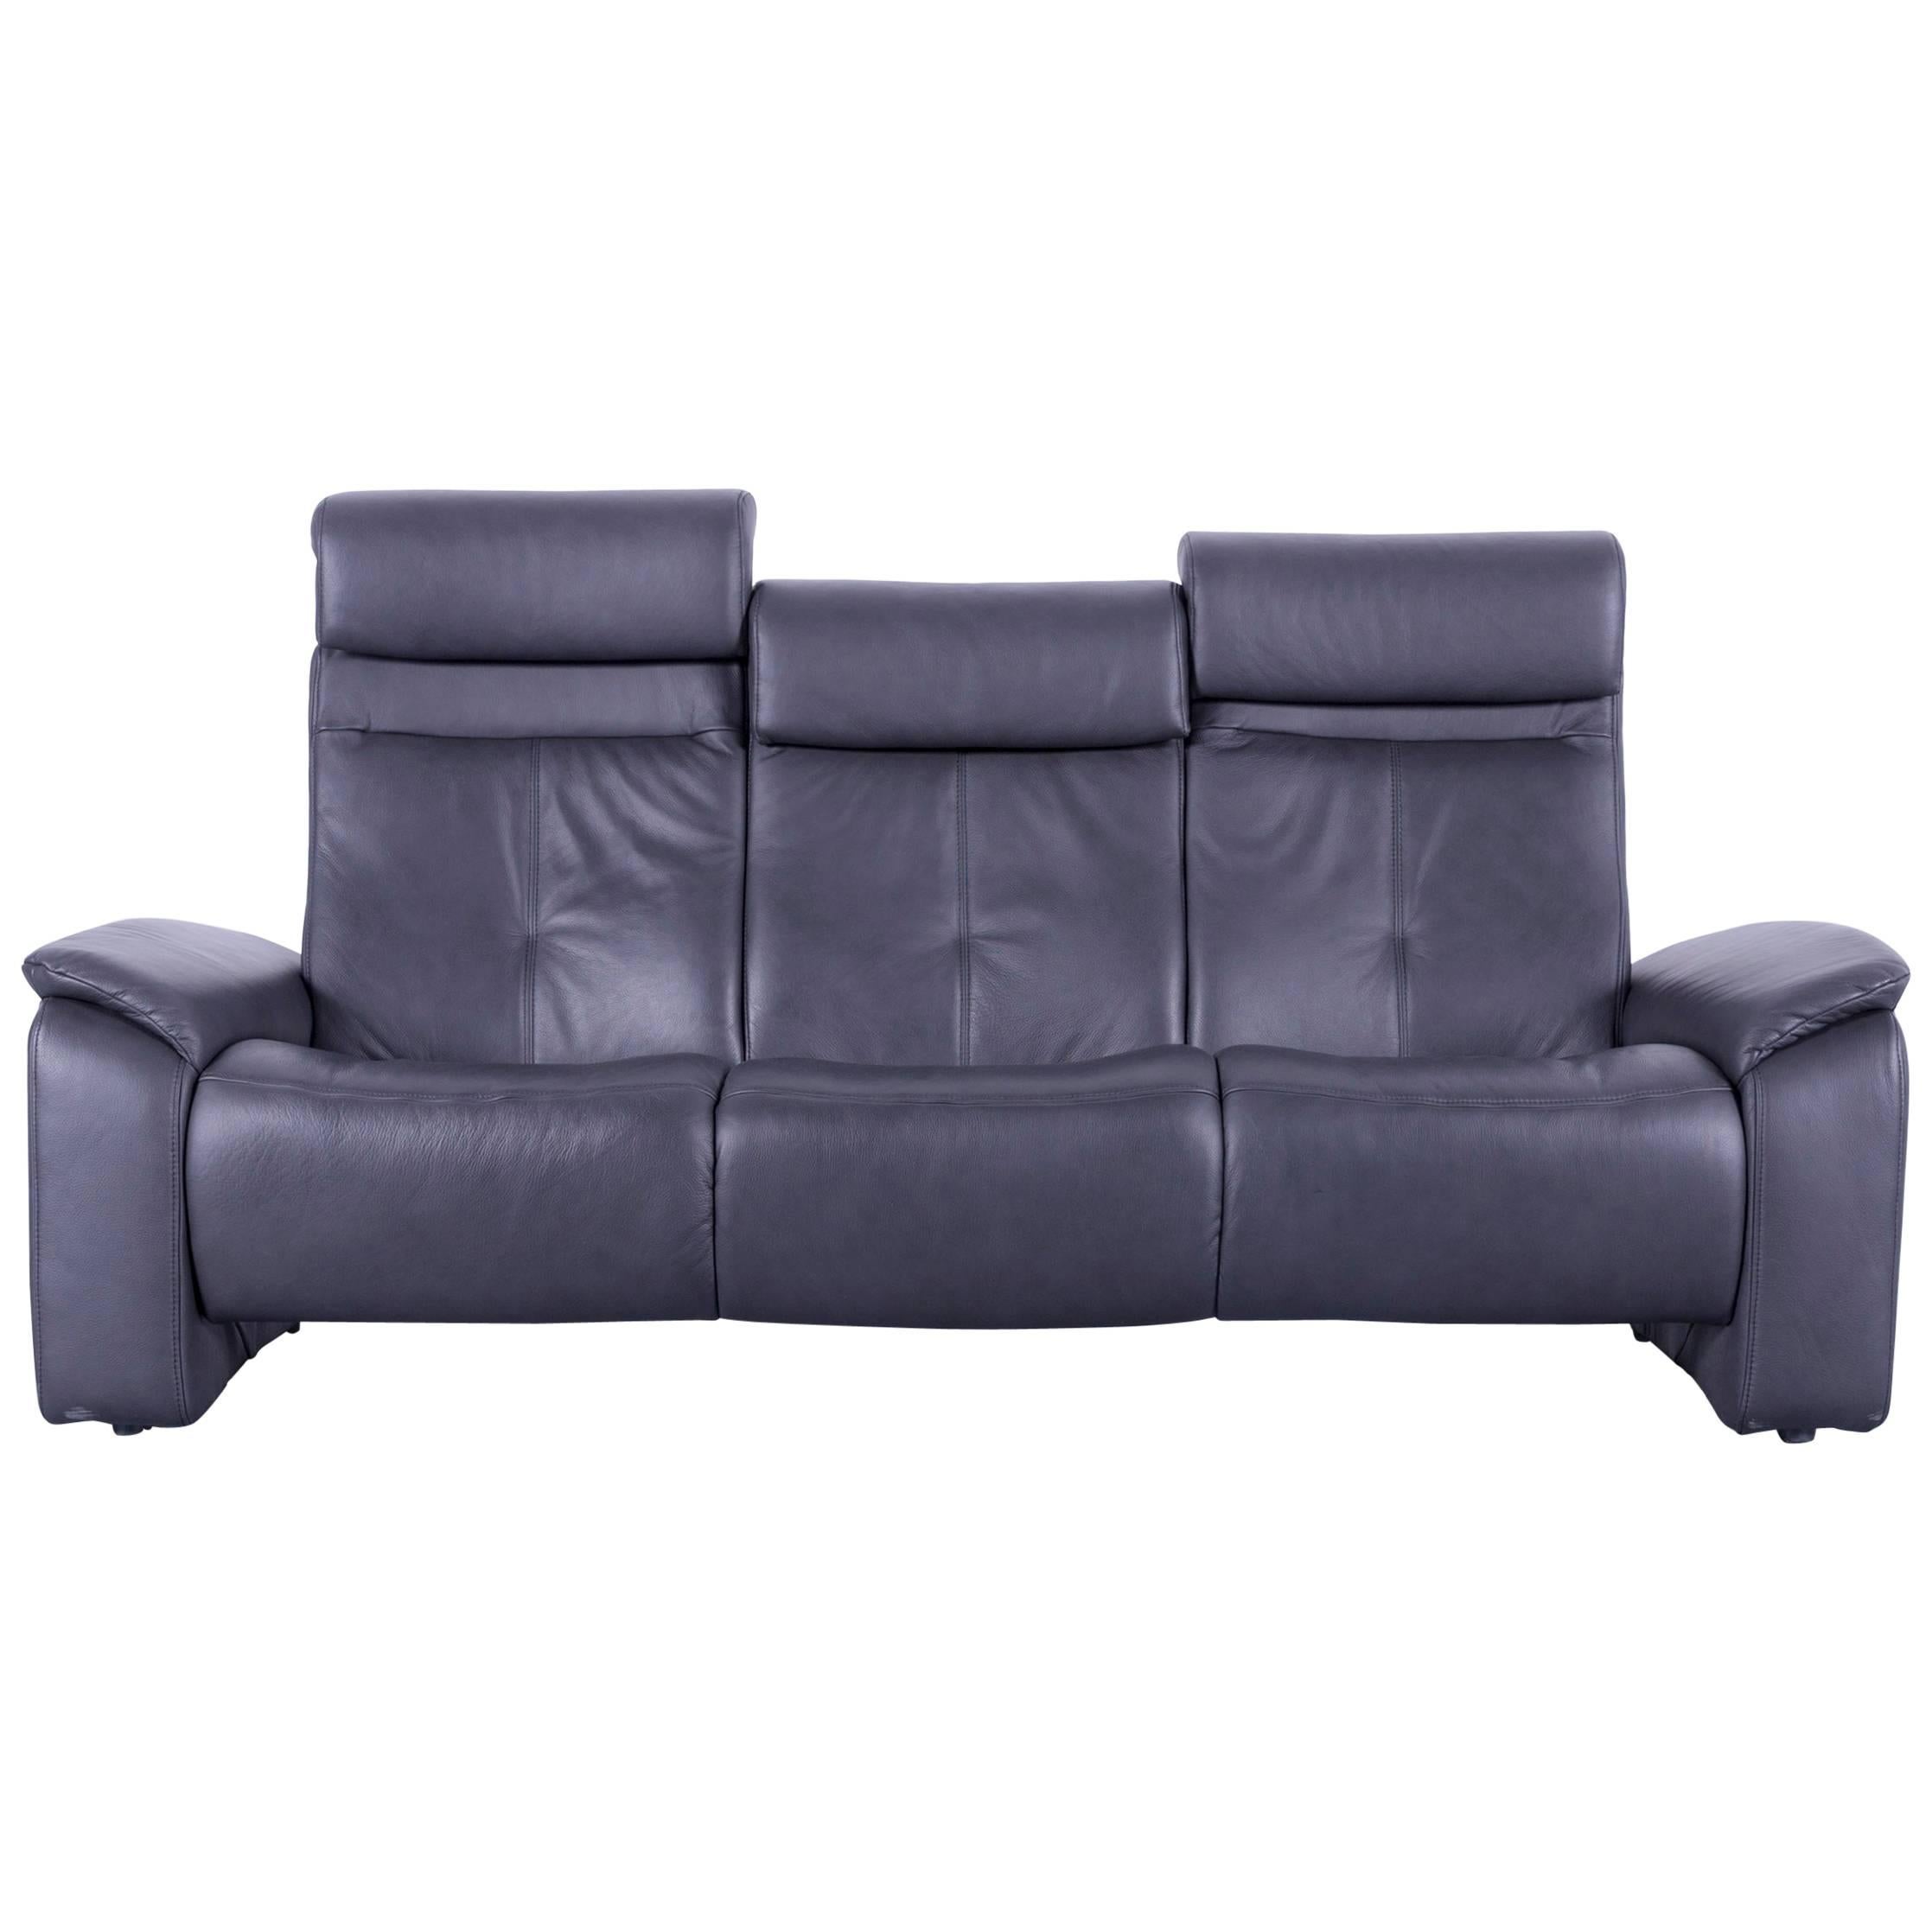 Himolla Leather Sofa Black Three-Seat Couch